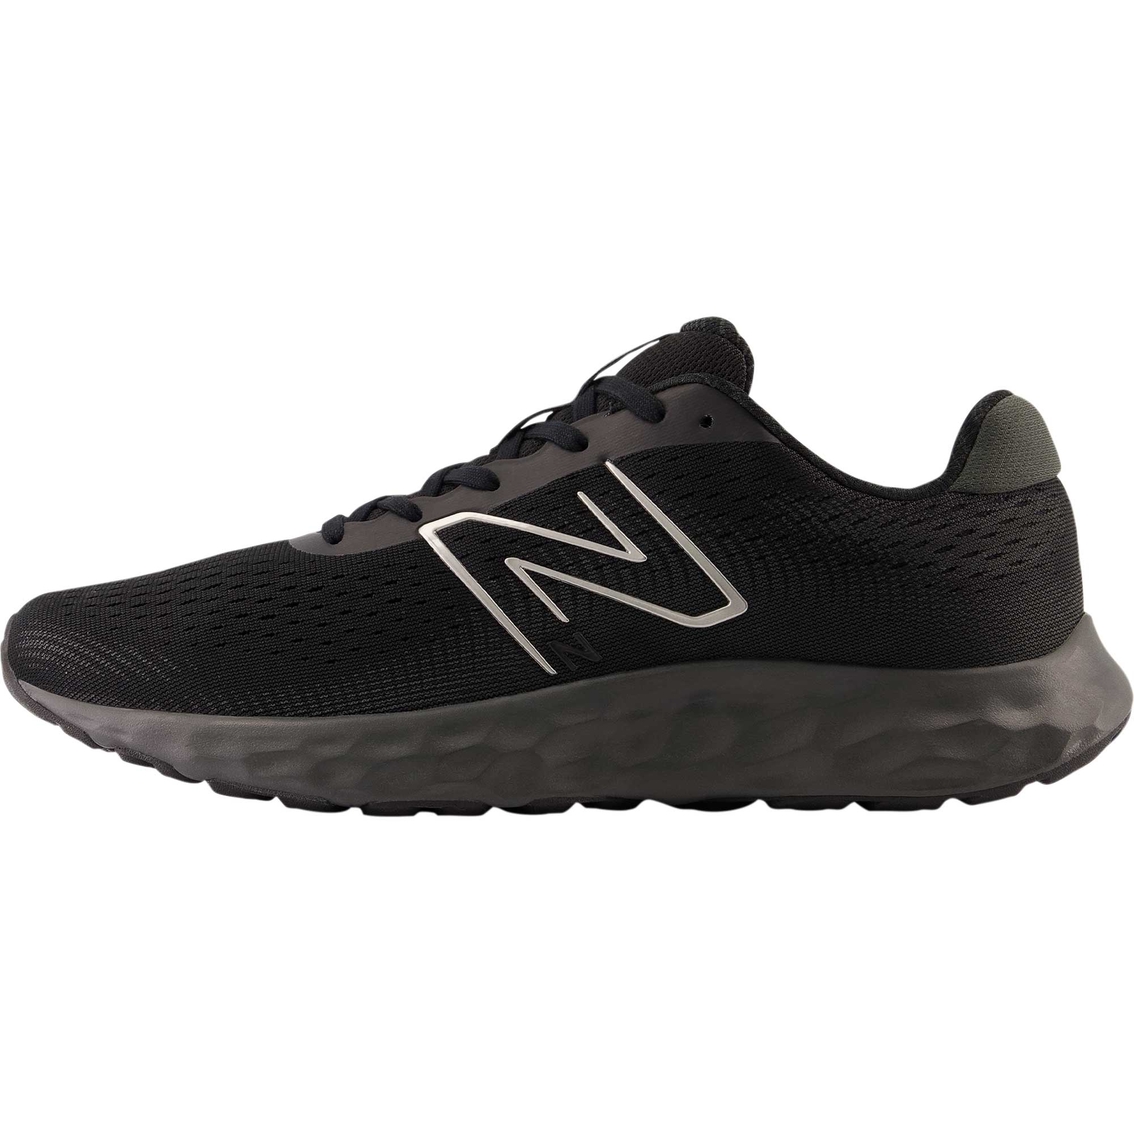 New Balance 520v8 Running Shoes - Image 3 of 4